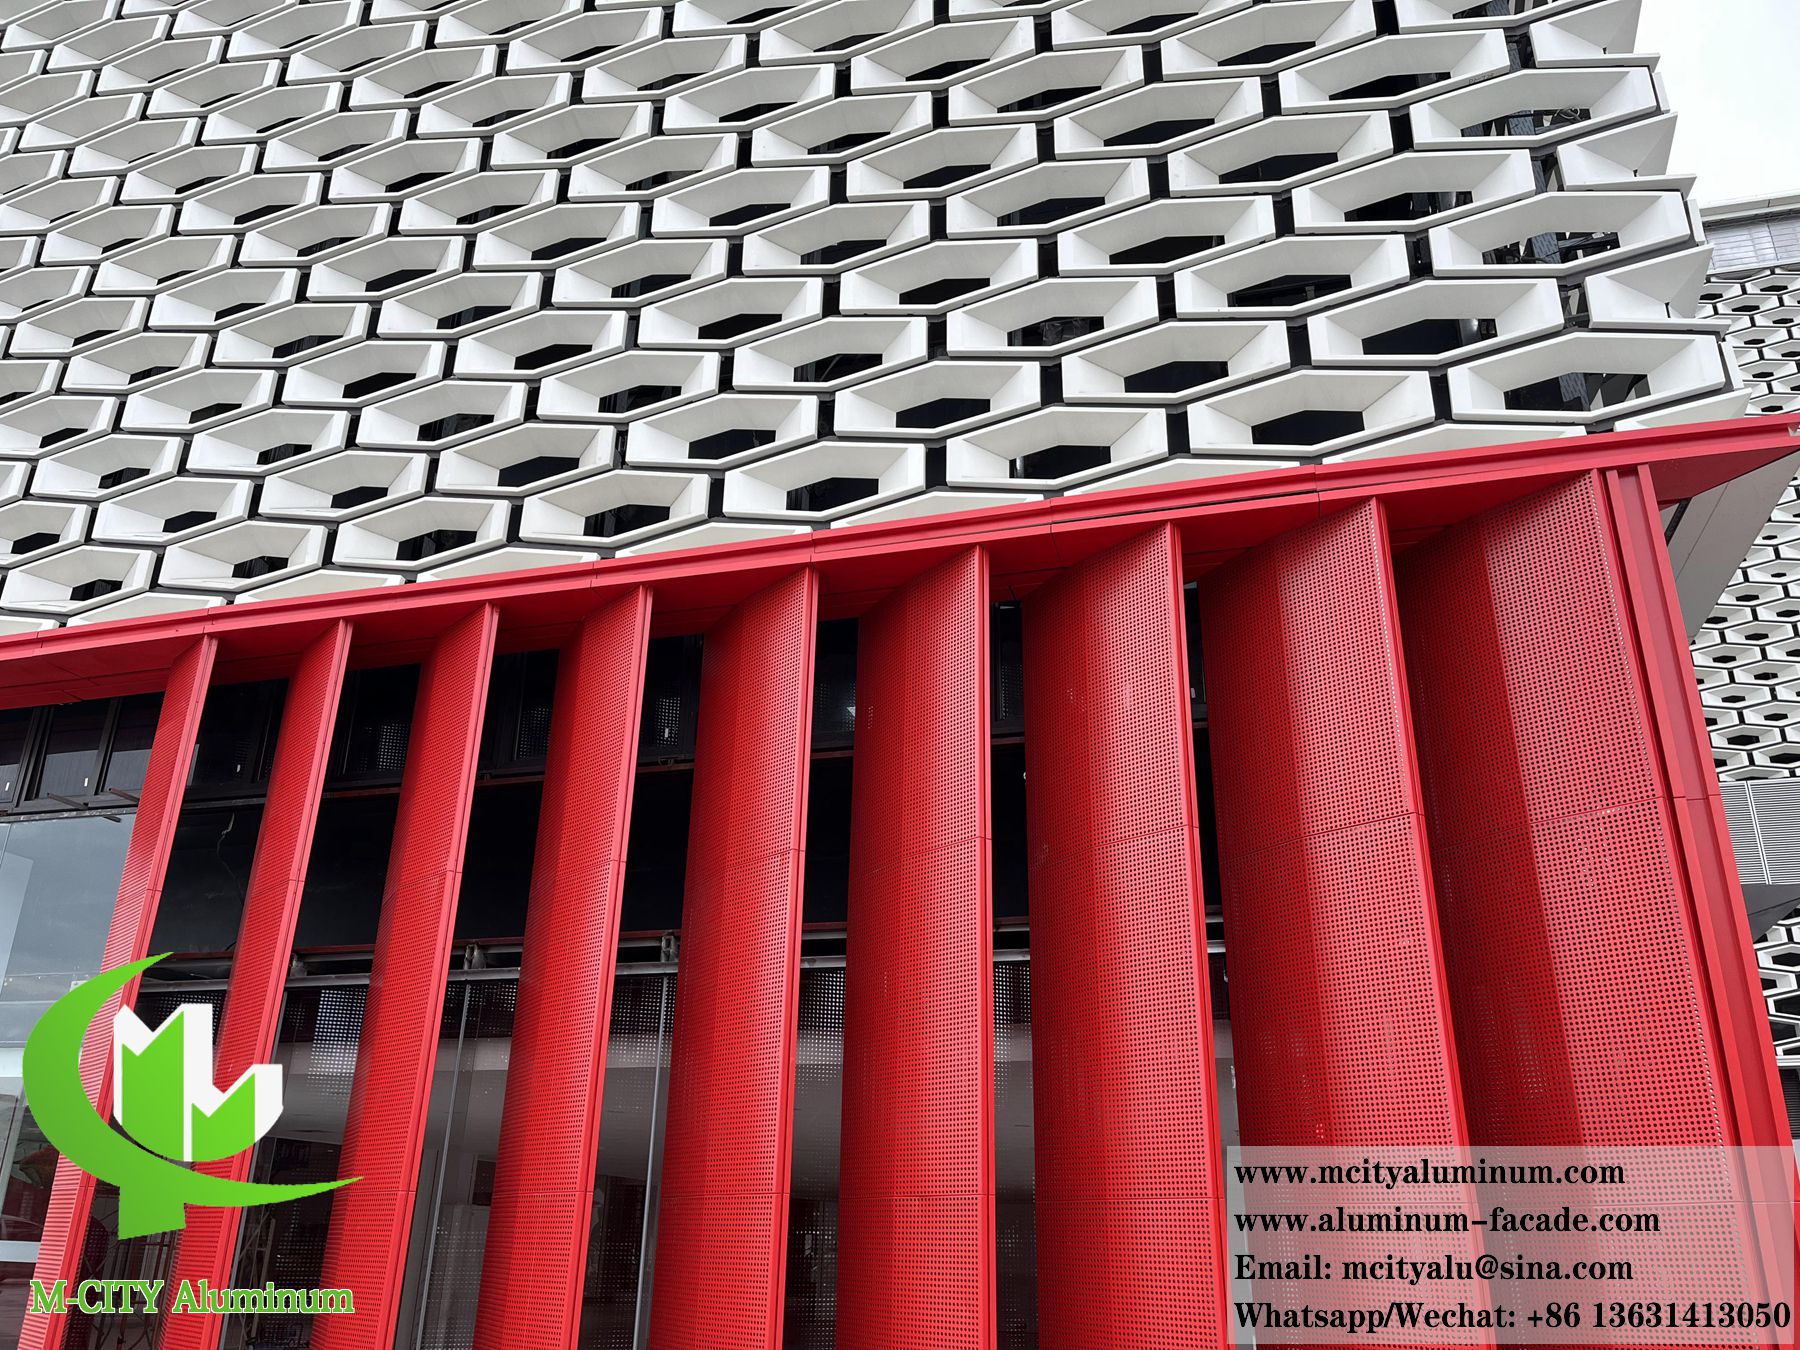 Guangzhou, China Metal sheet perforating aluminium wall cladding panel for sun shading louver 